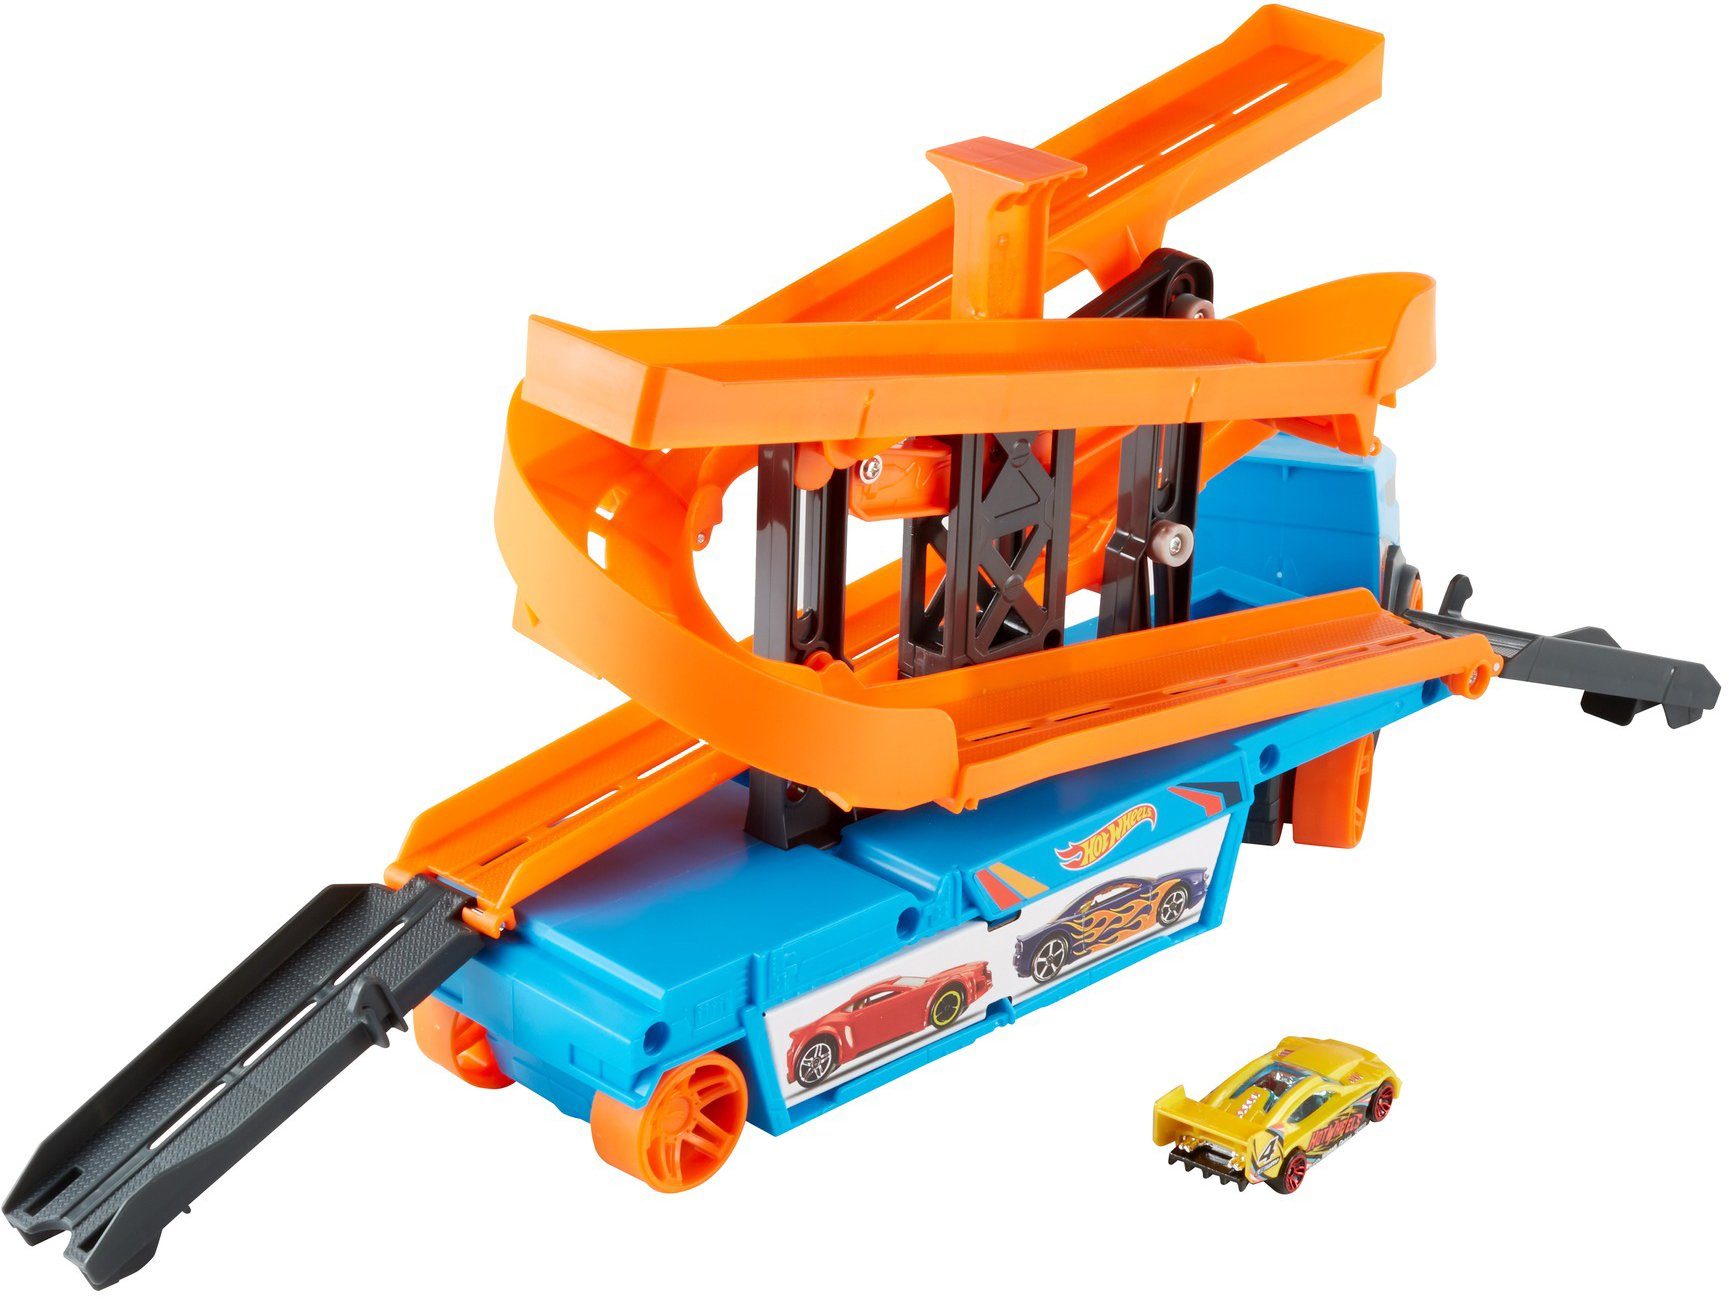 Action Hot Wheels Zielgruppe: Spielauto, Schulkinder, Mega Kindergartenkinder 1 Transporter, inkl. Spielzeug-Transporter